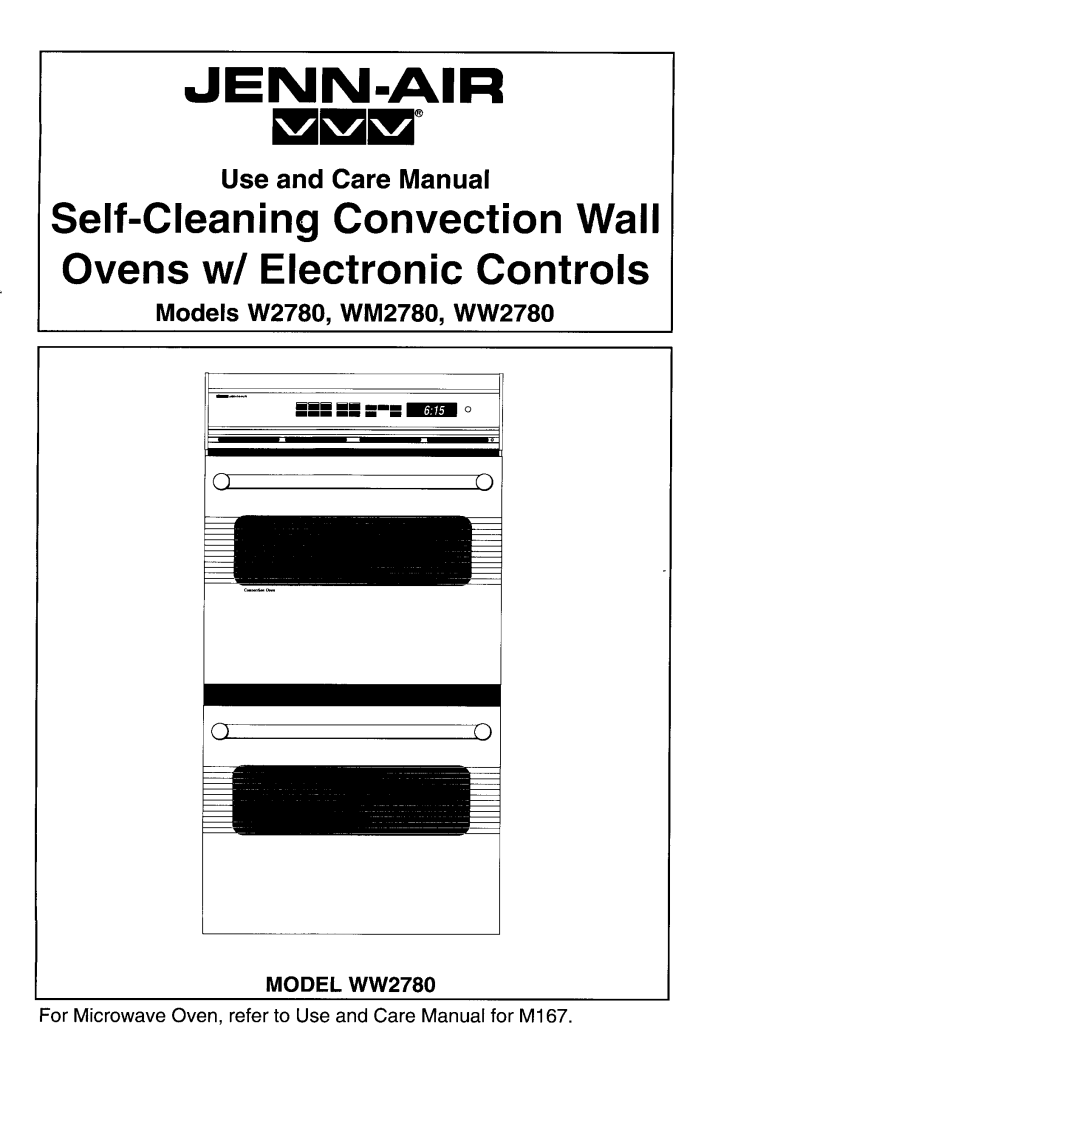 Jenn-Air manual MODEL WW2780, Jenn-Air, Use and Care Manual, Models W2780, WM2780, WW2780, annum N 